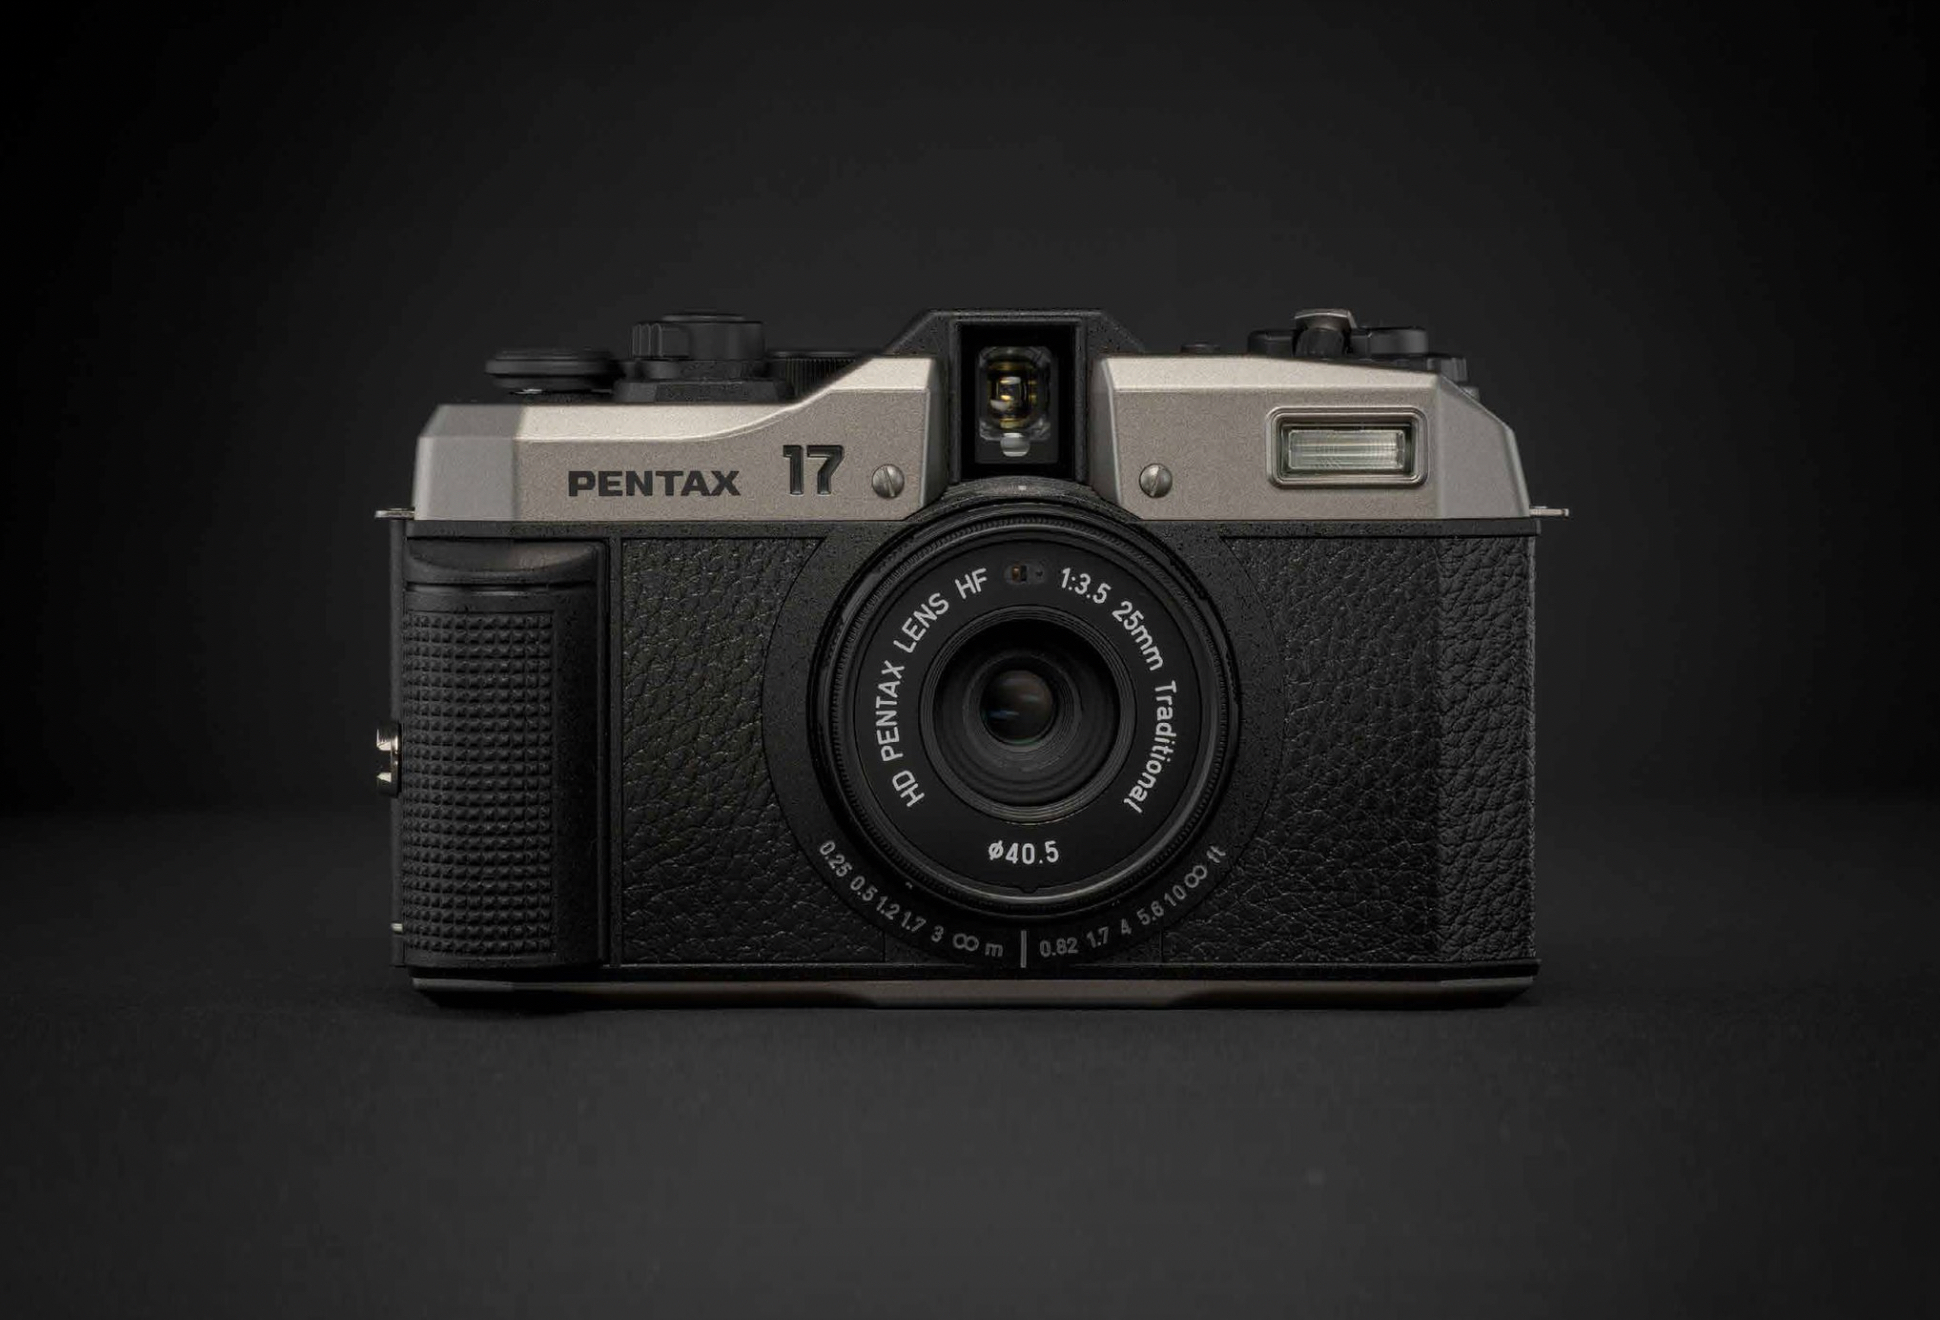 Pentax 17 Camera | Image